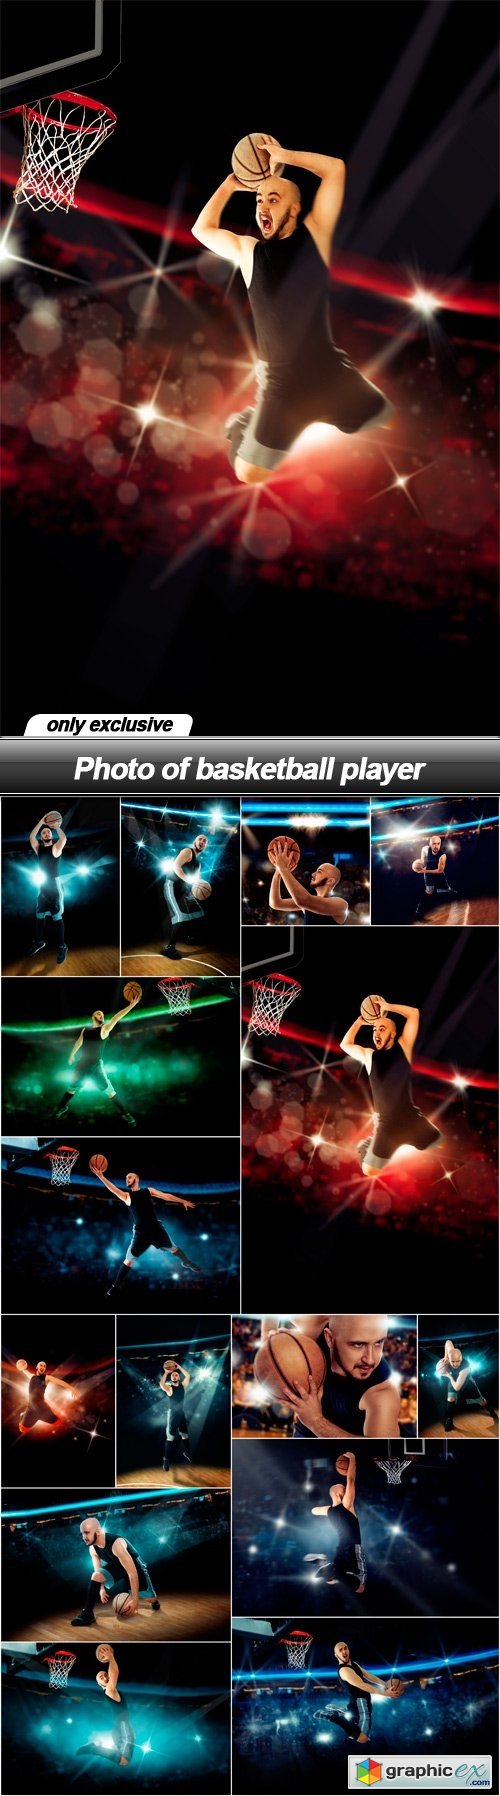 Photo of basketball player - 15 UHQ JPEG